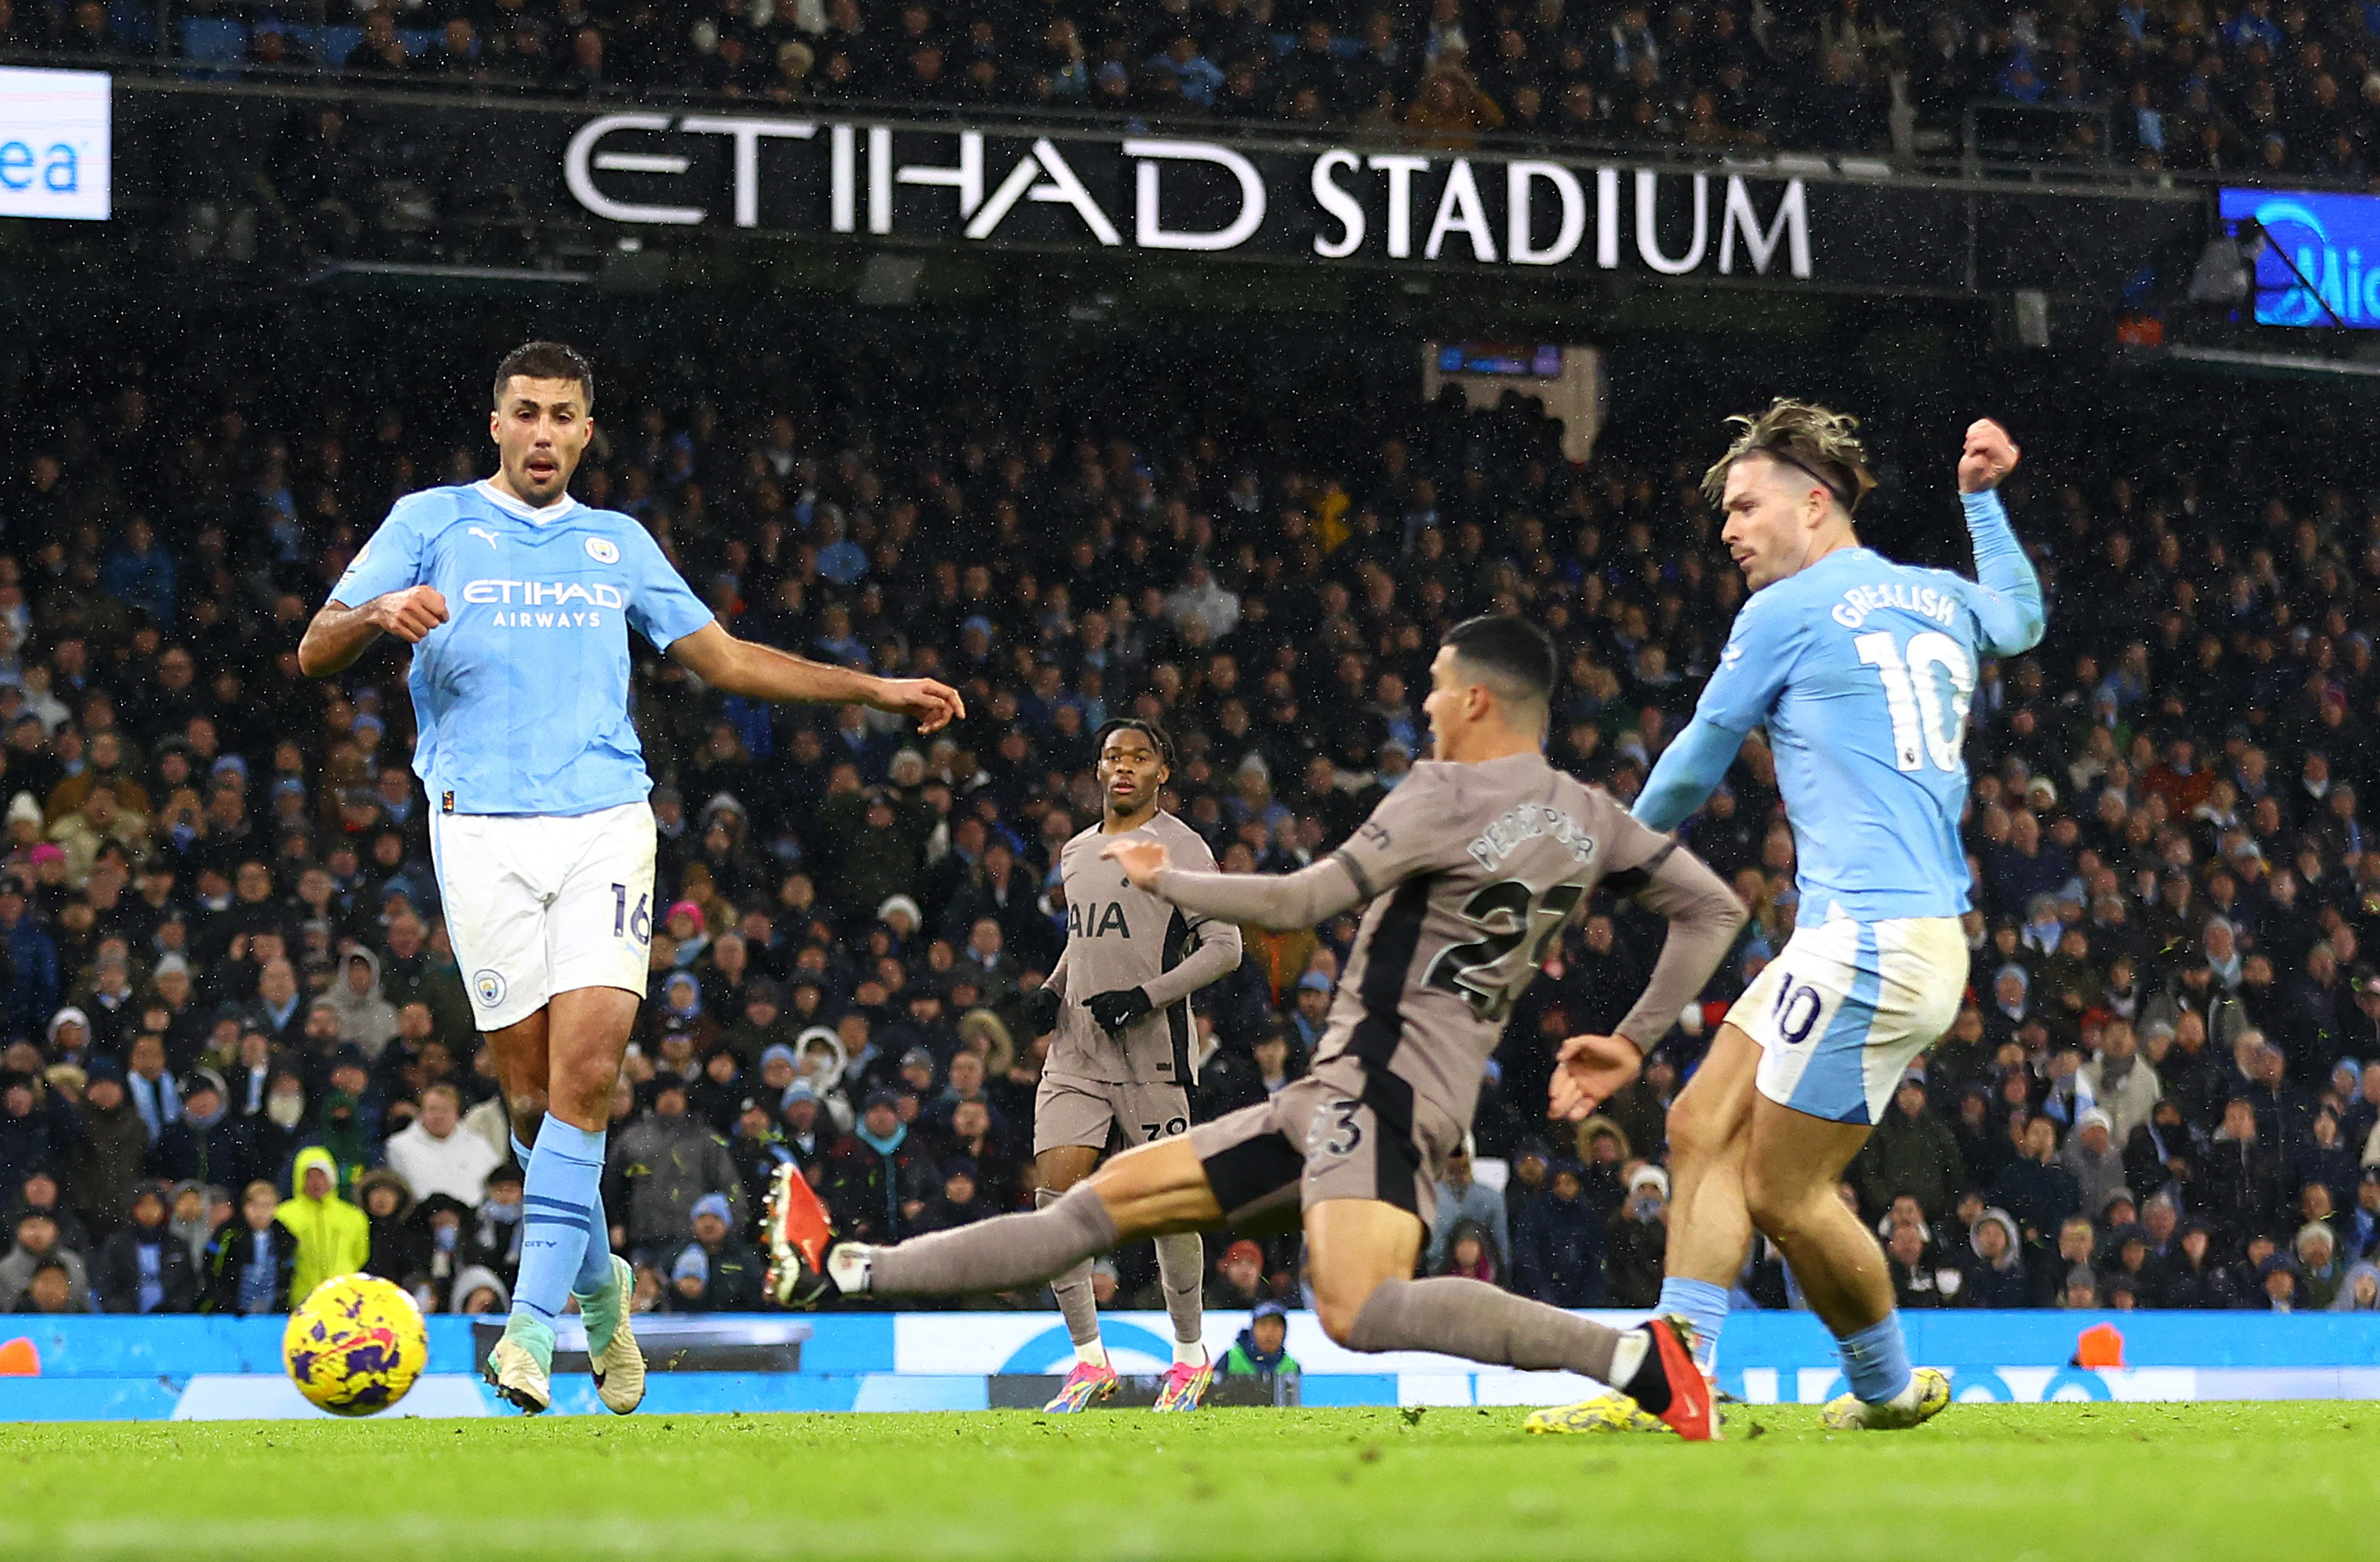 Manchester City win third successive English Premier League title, Football News